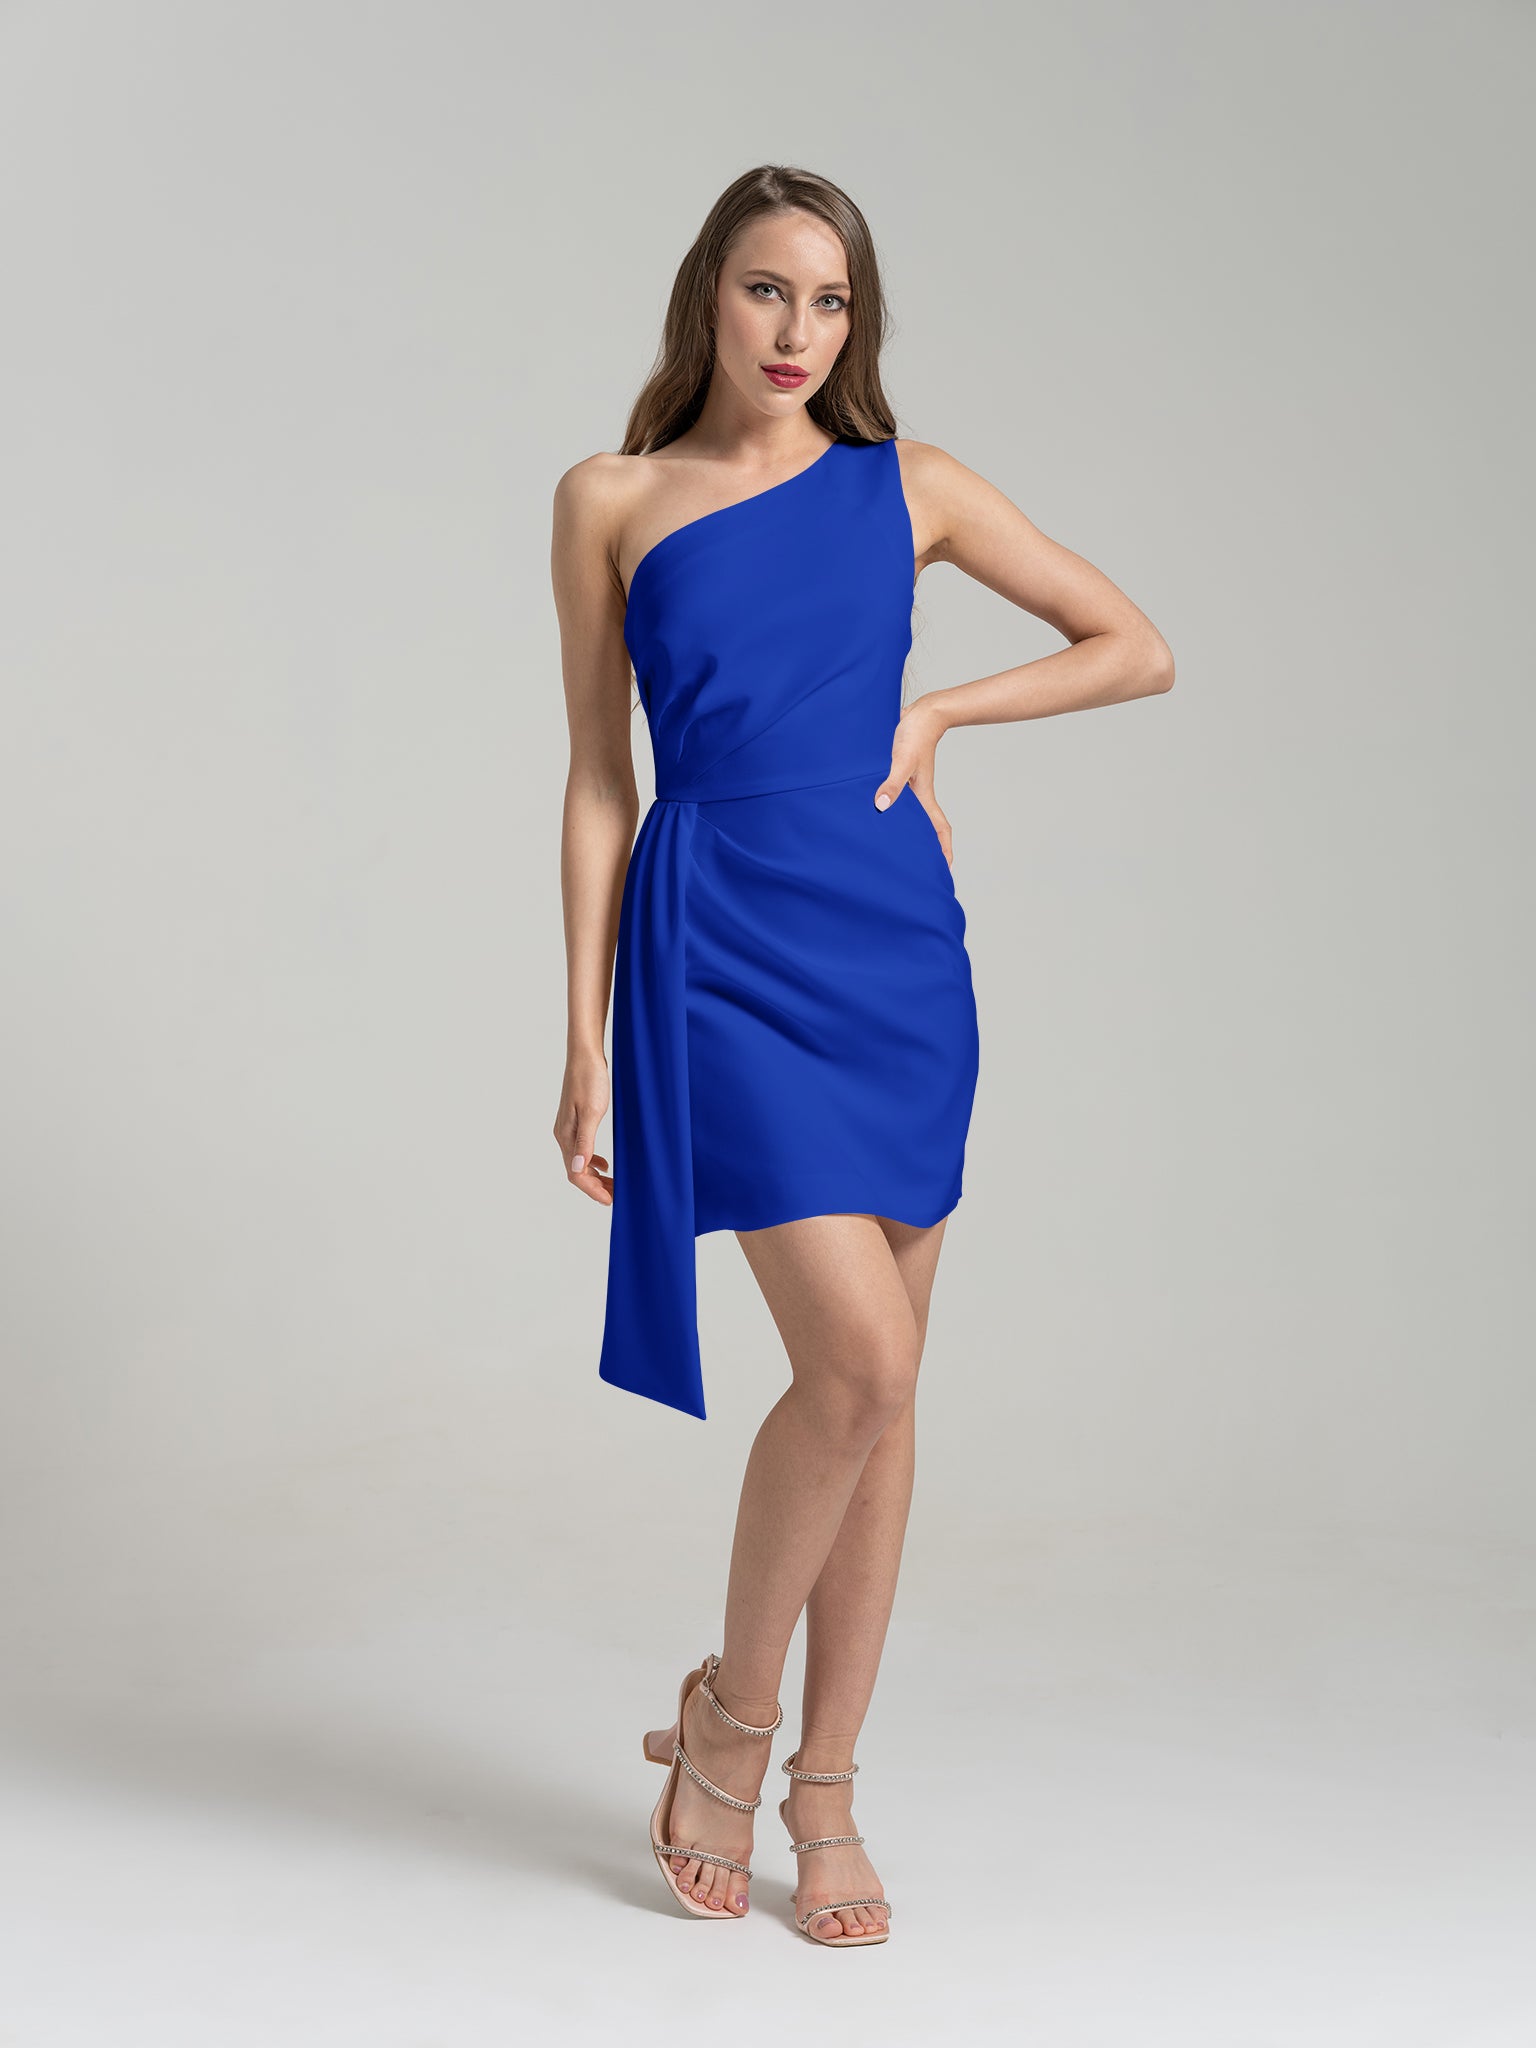 Iconic Glamour Short Dress - Azure Blue by Tia Dorraine Women's Luxury Fashion Designer Clothing Brand